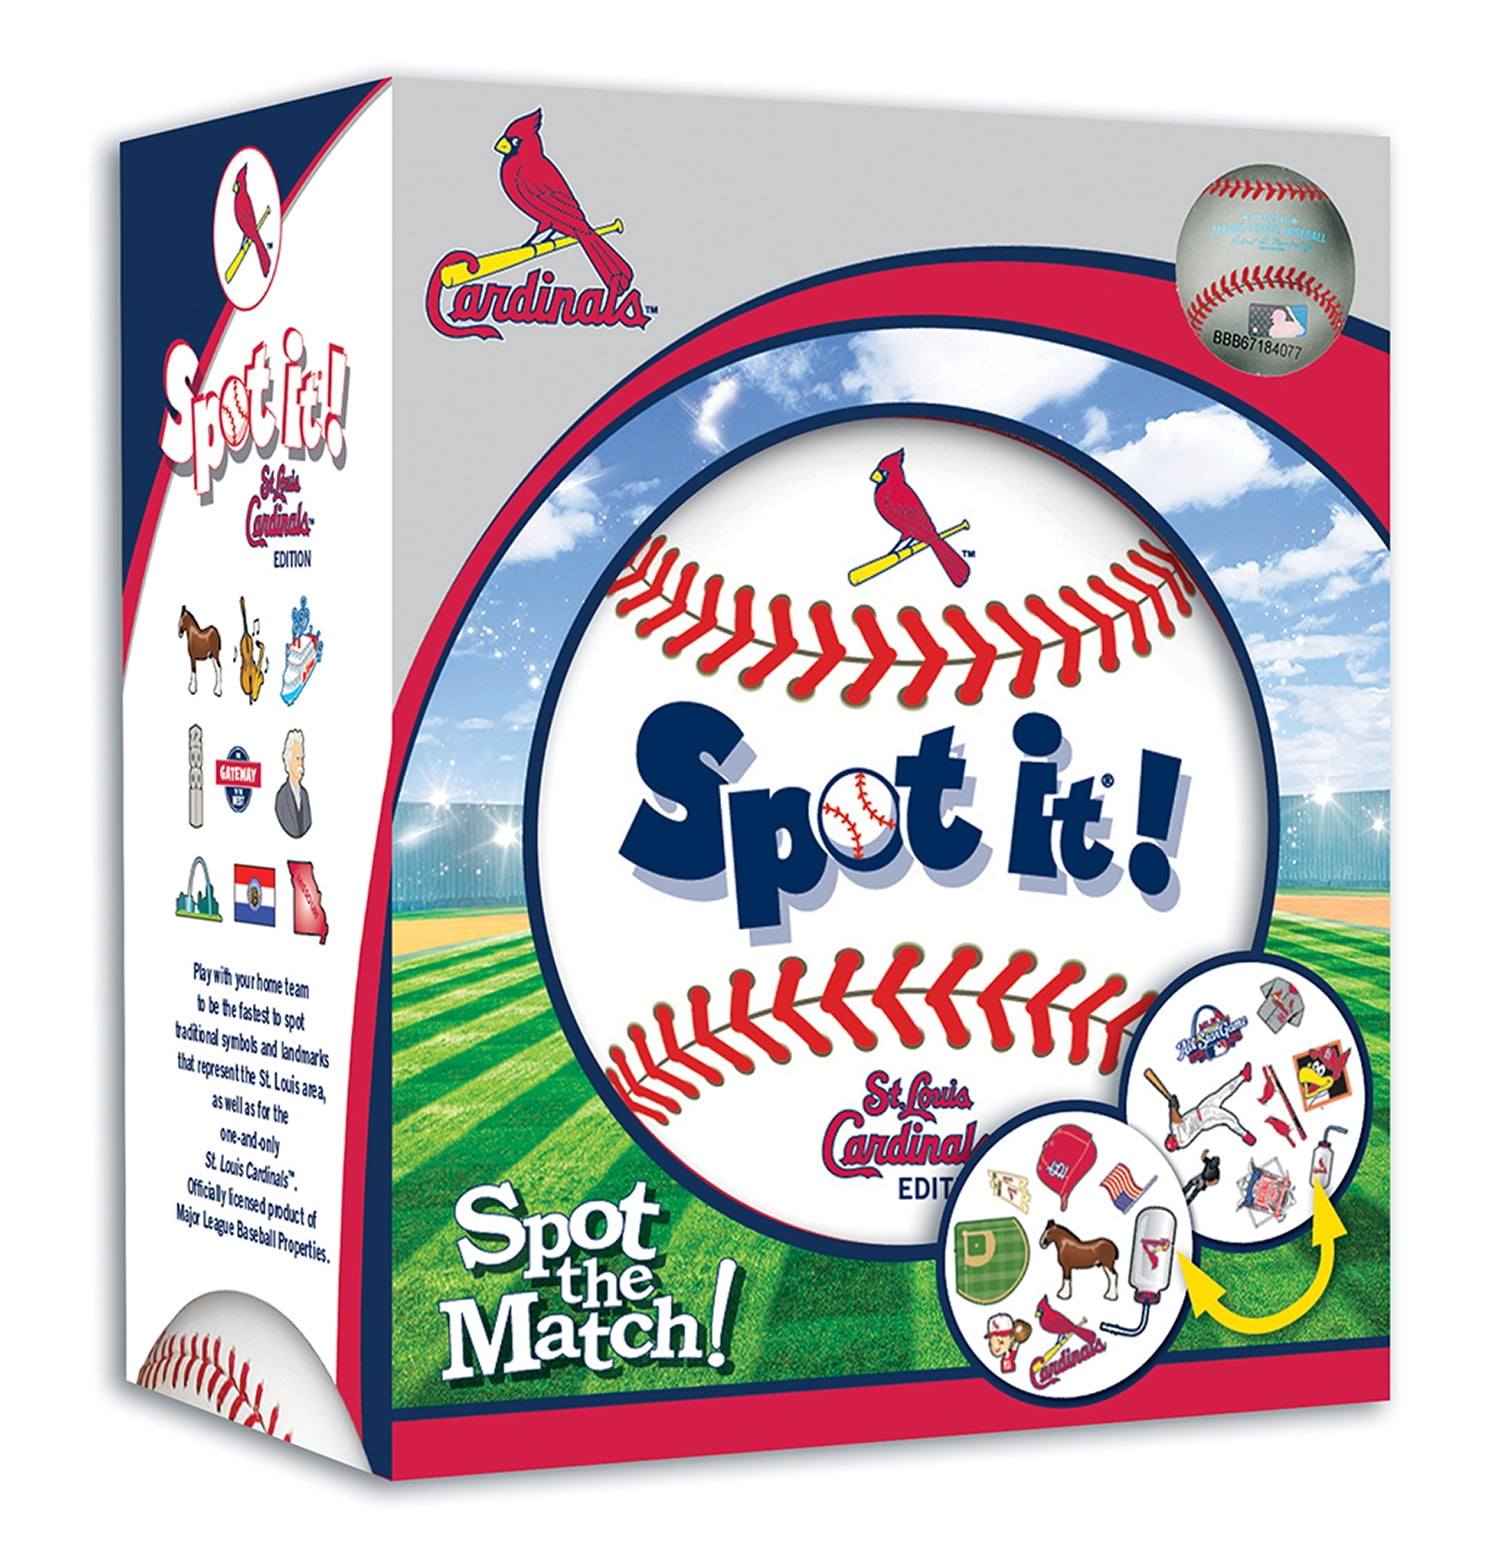 Monopoly: St. Louis Cardinals World Series